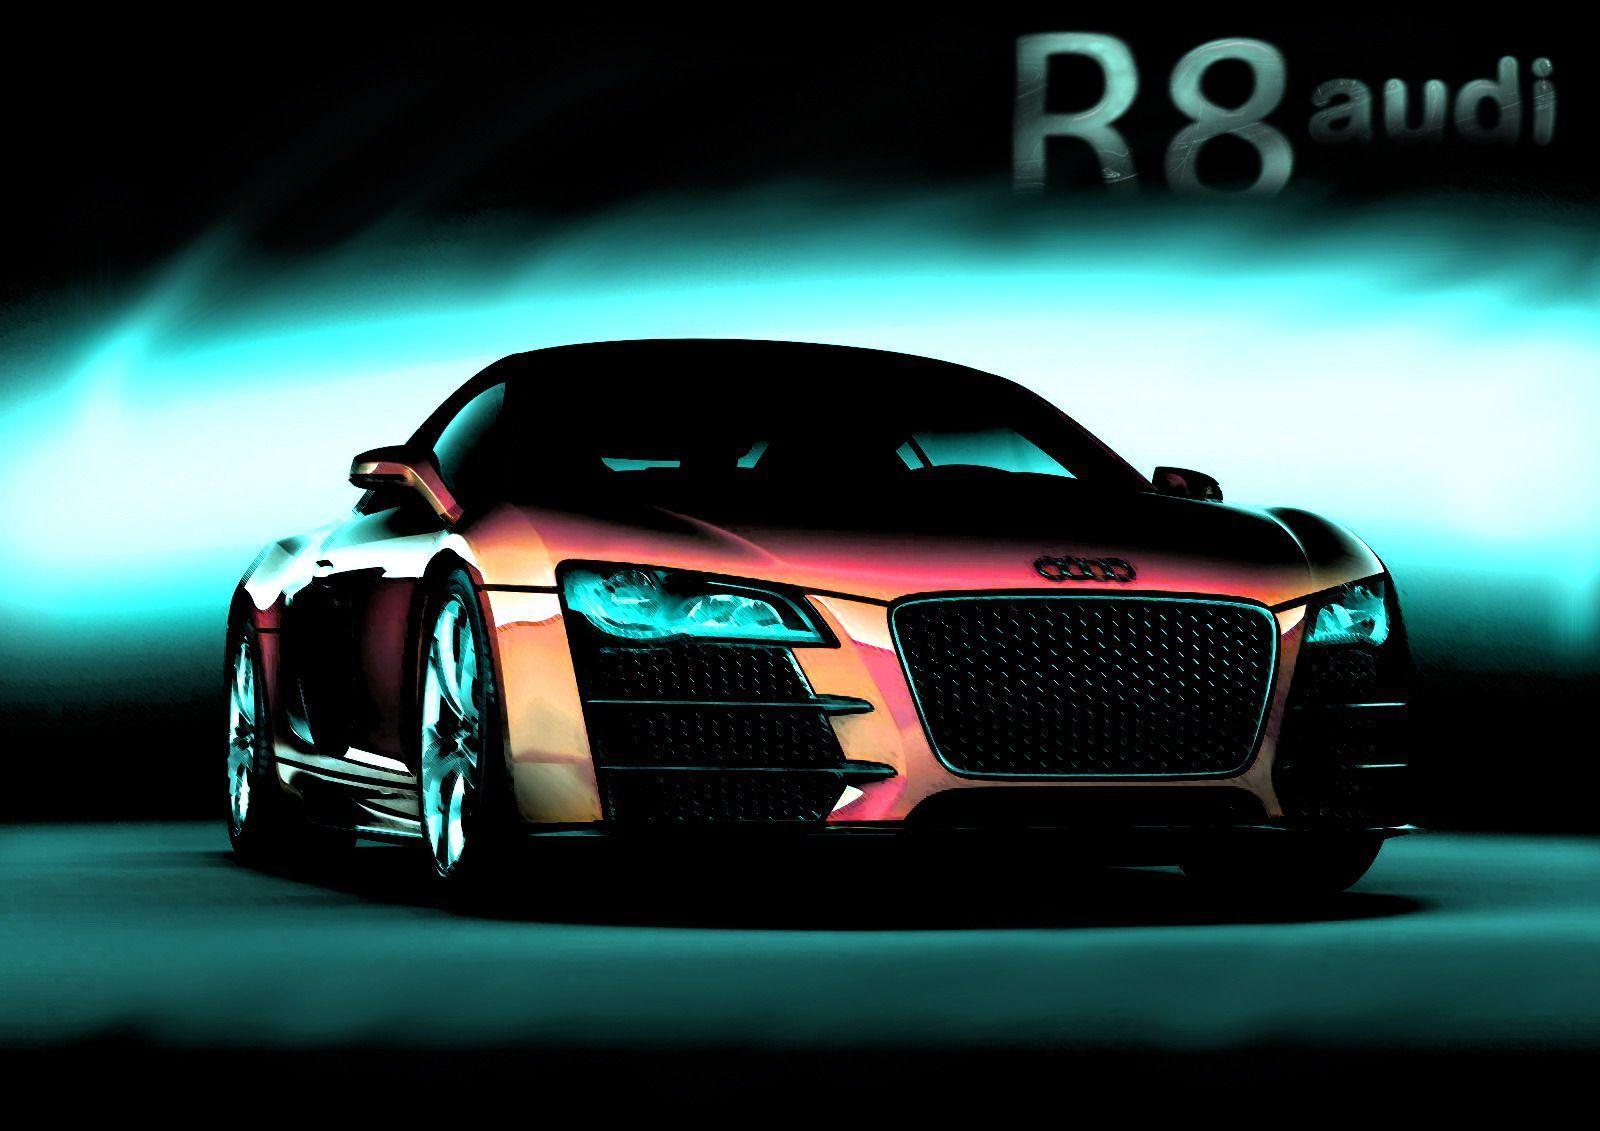 Audi R8 Cars Wallpaper For Widescreen & Desktop Background